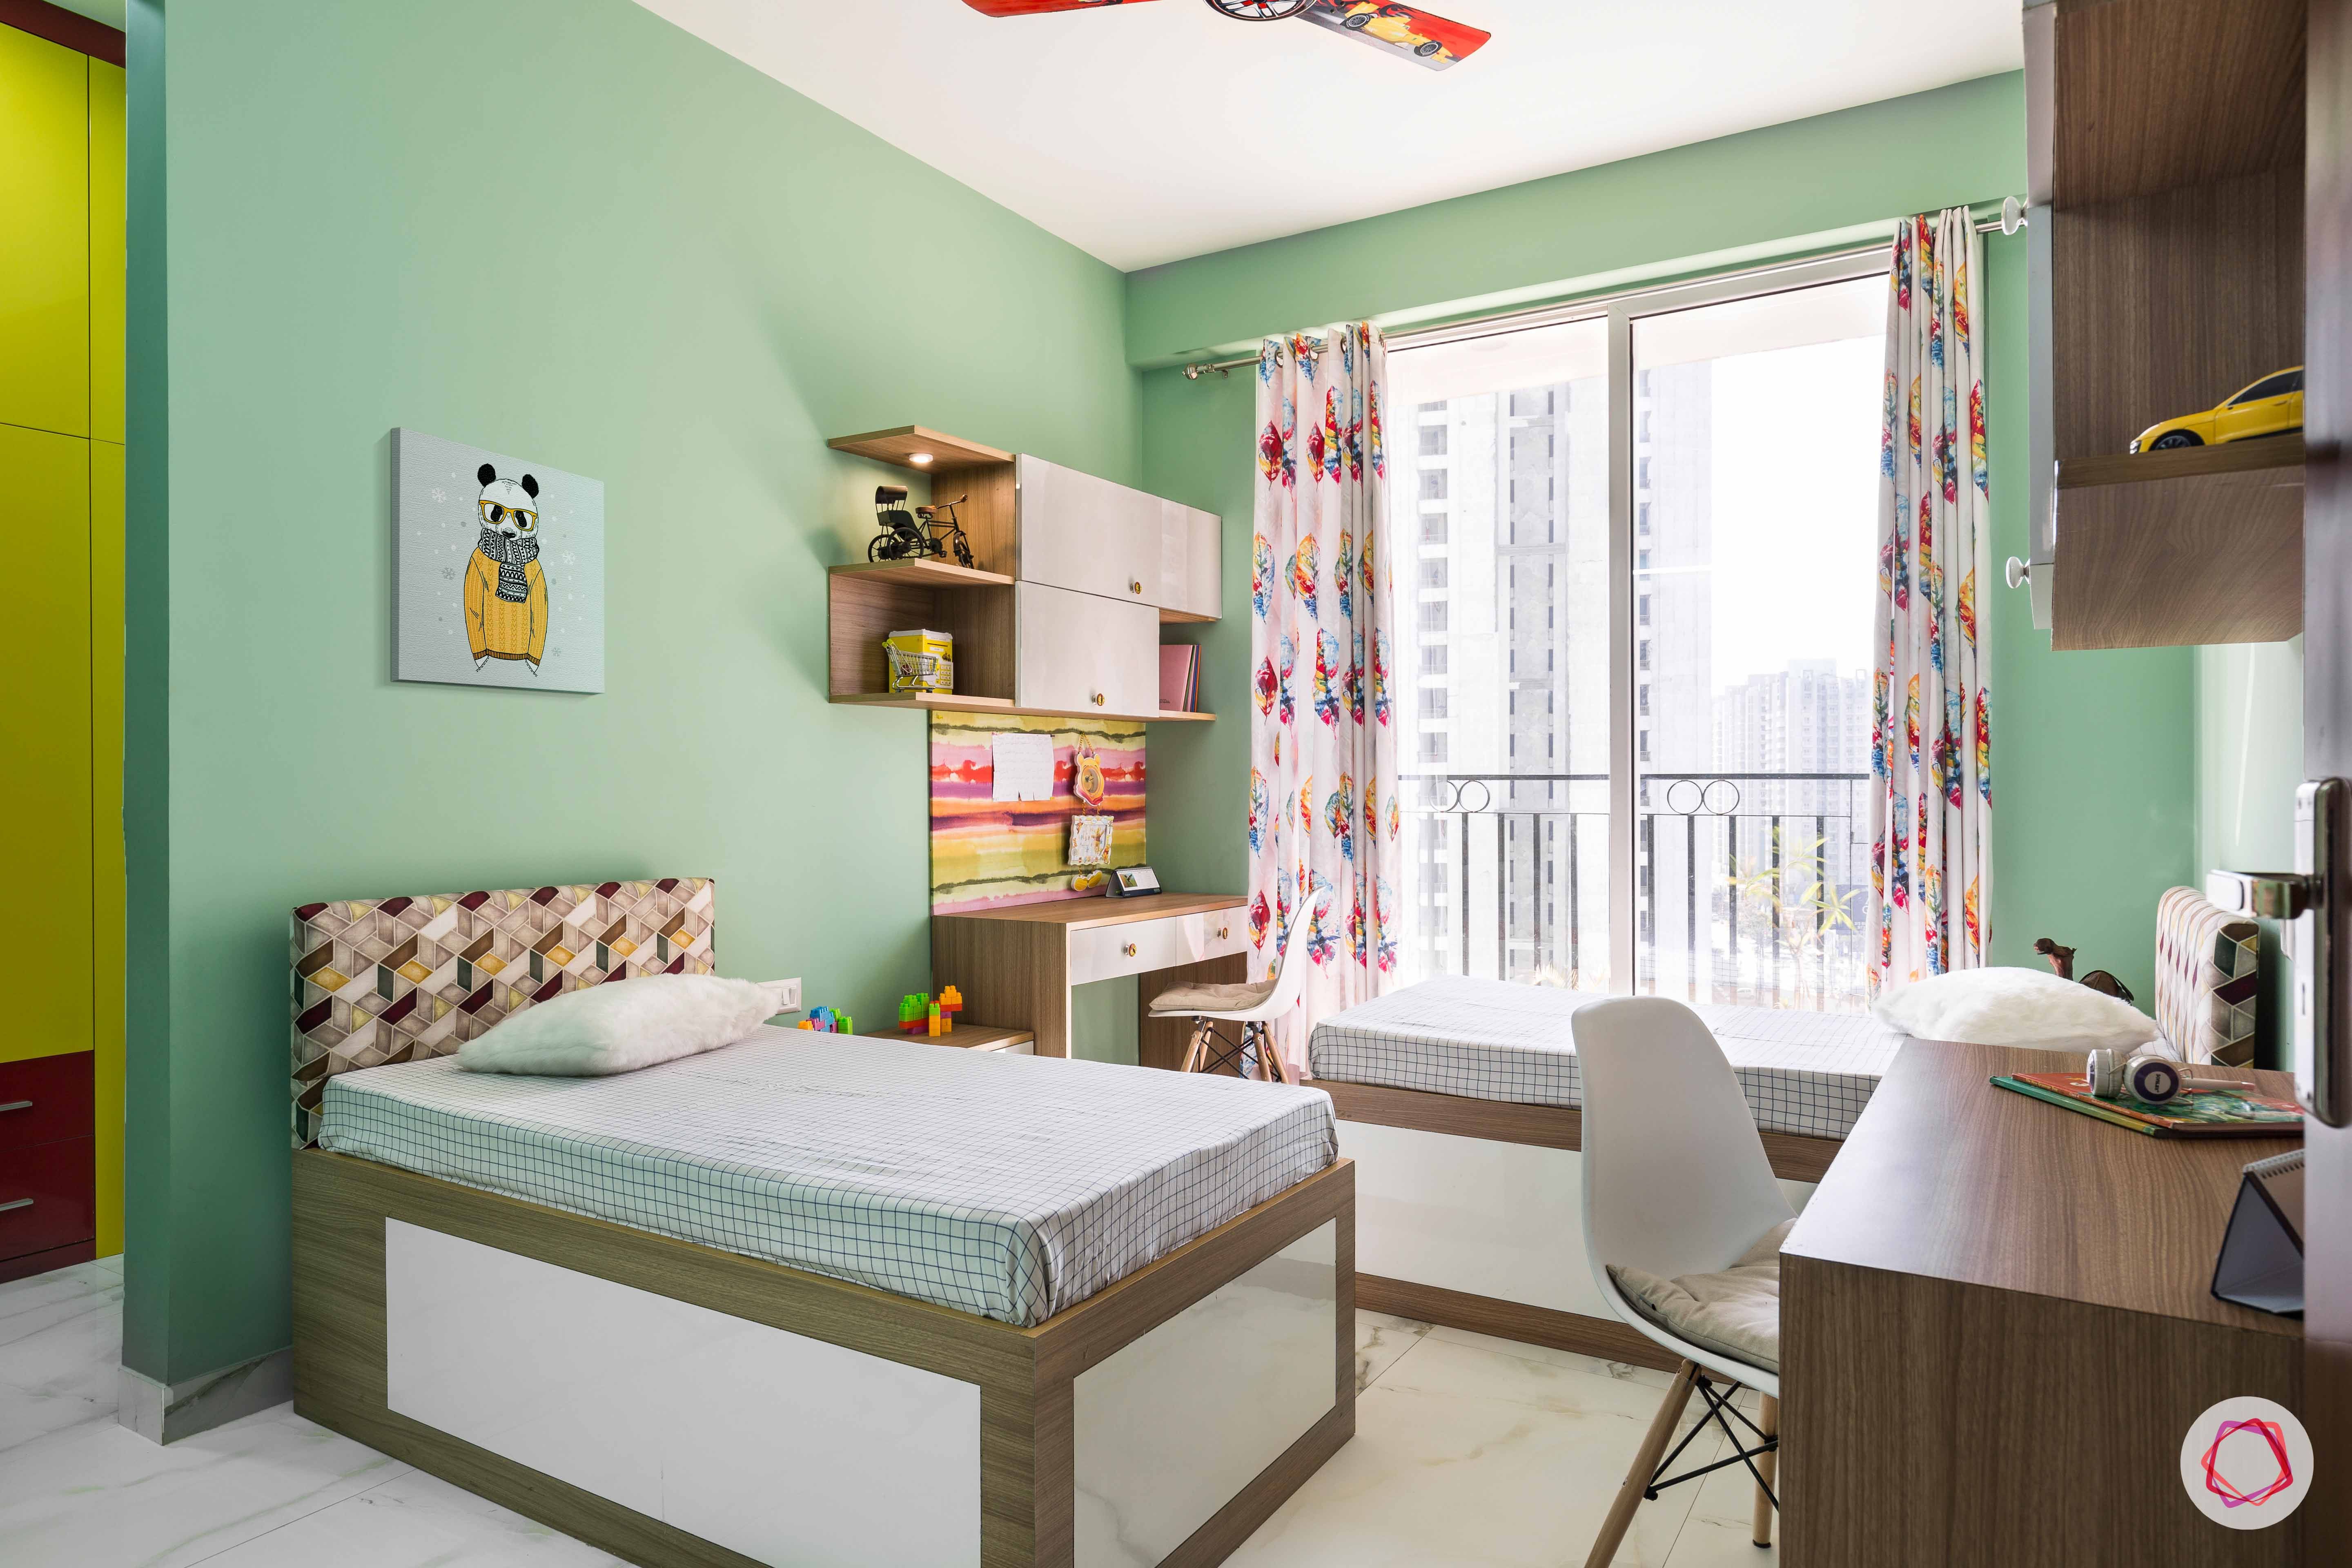 kids-bedroom-mint-green-paint-walls-study-table-beds